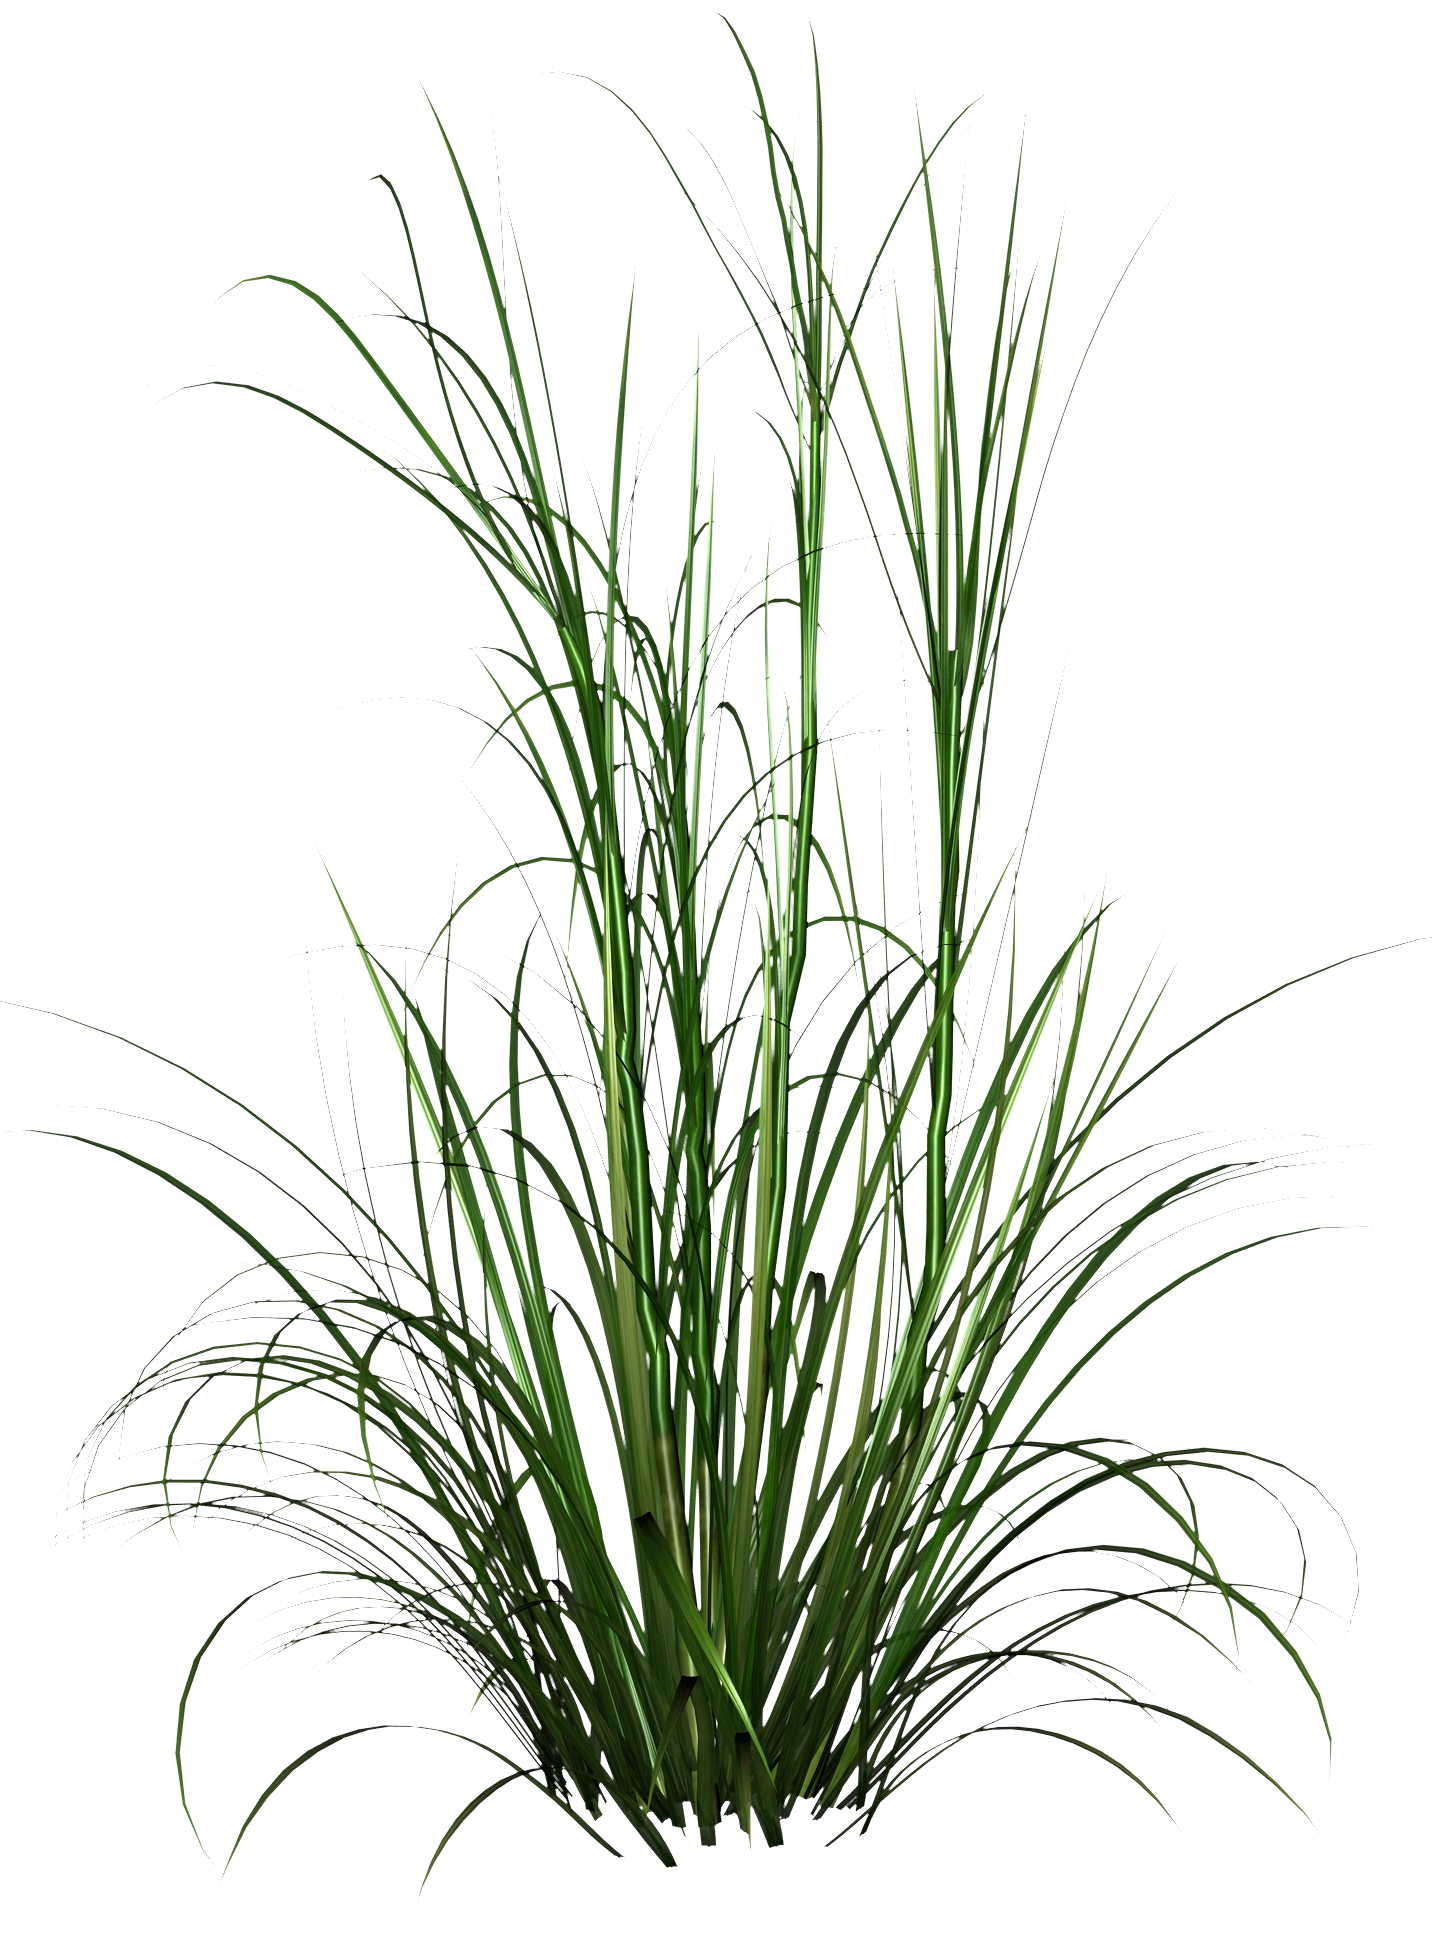 Tall Grass PNG, Tall Grass Transparent Background - FreeIconsPNG